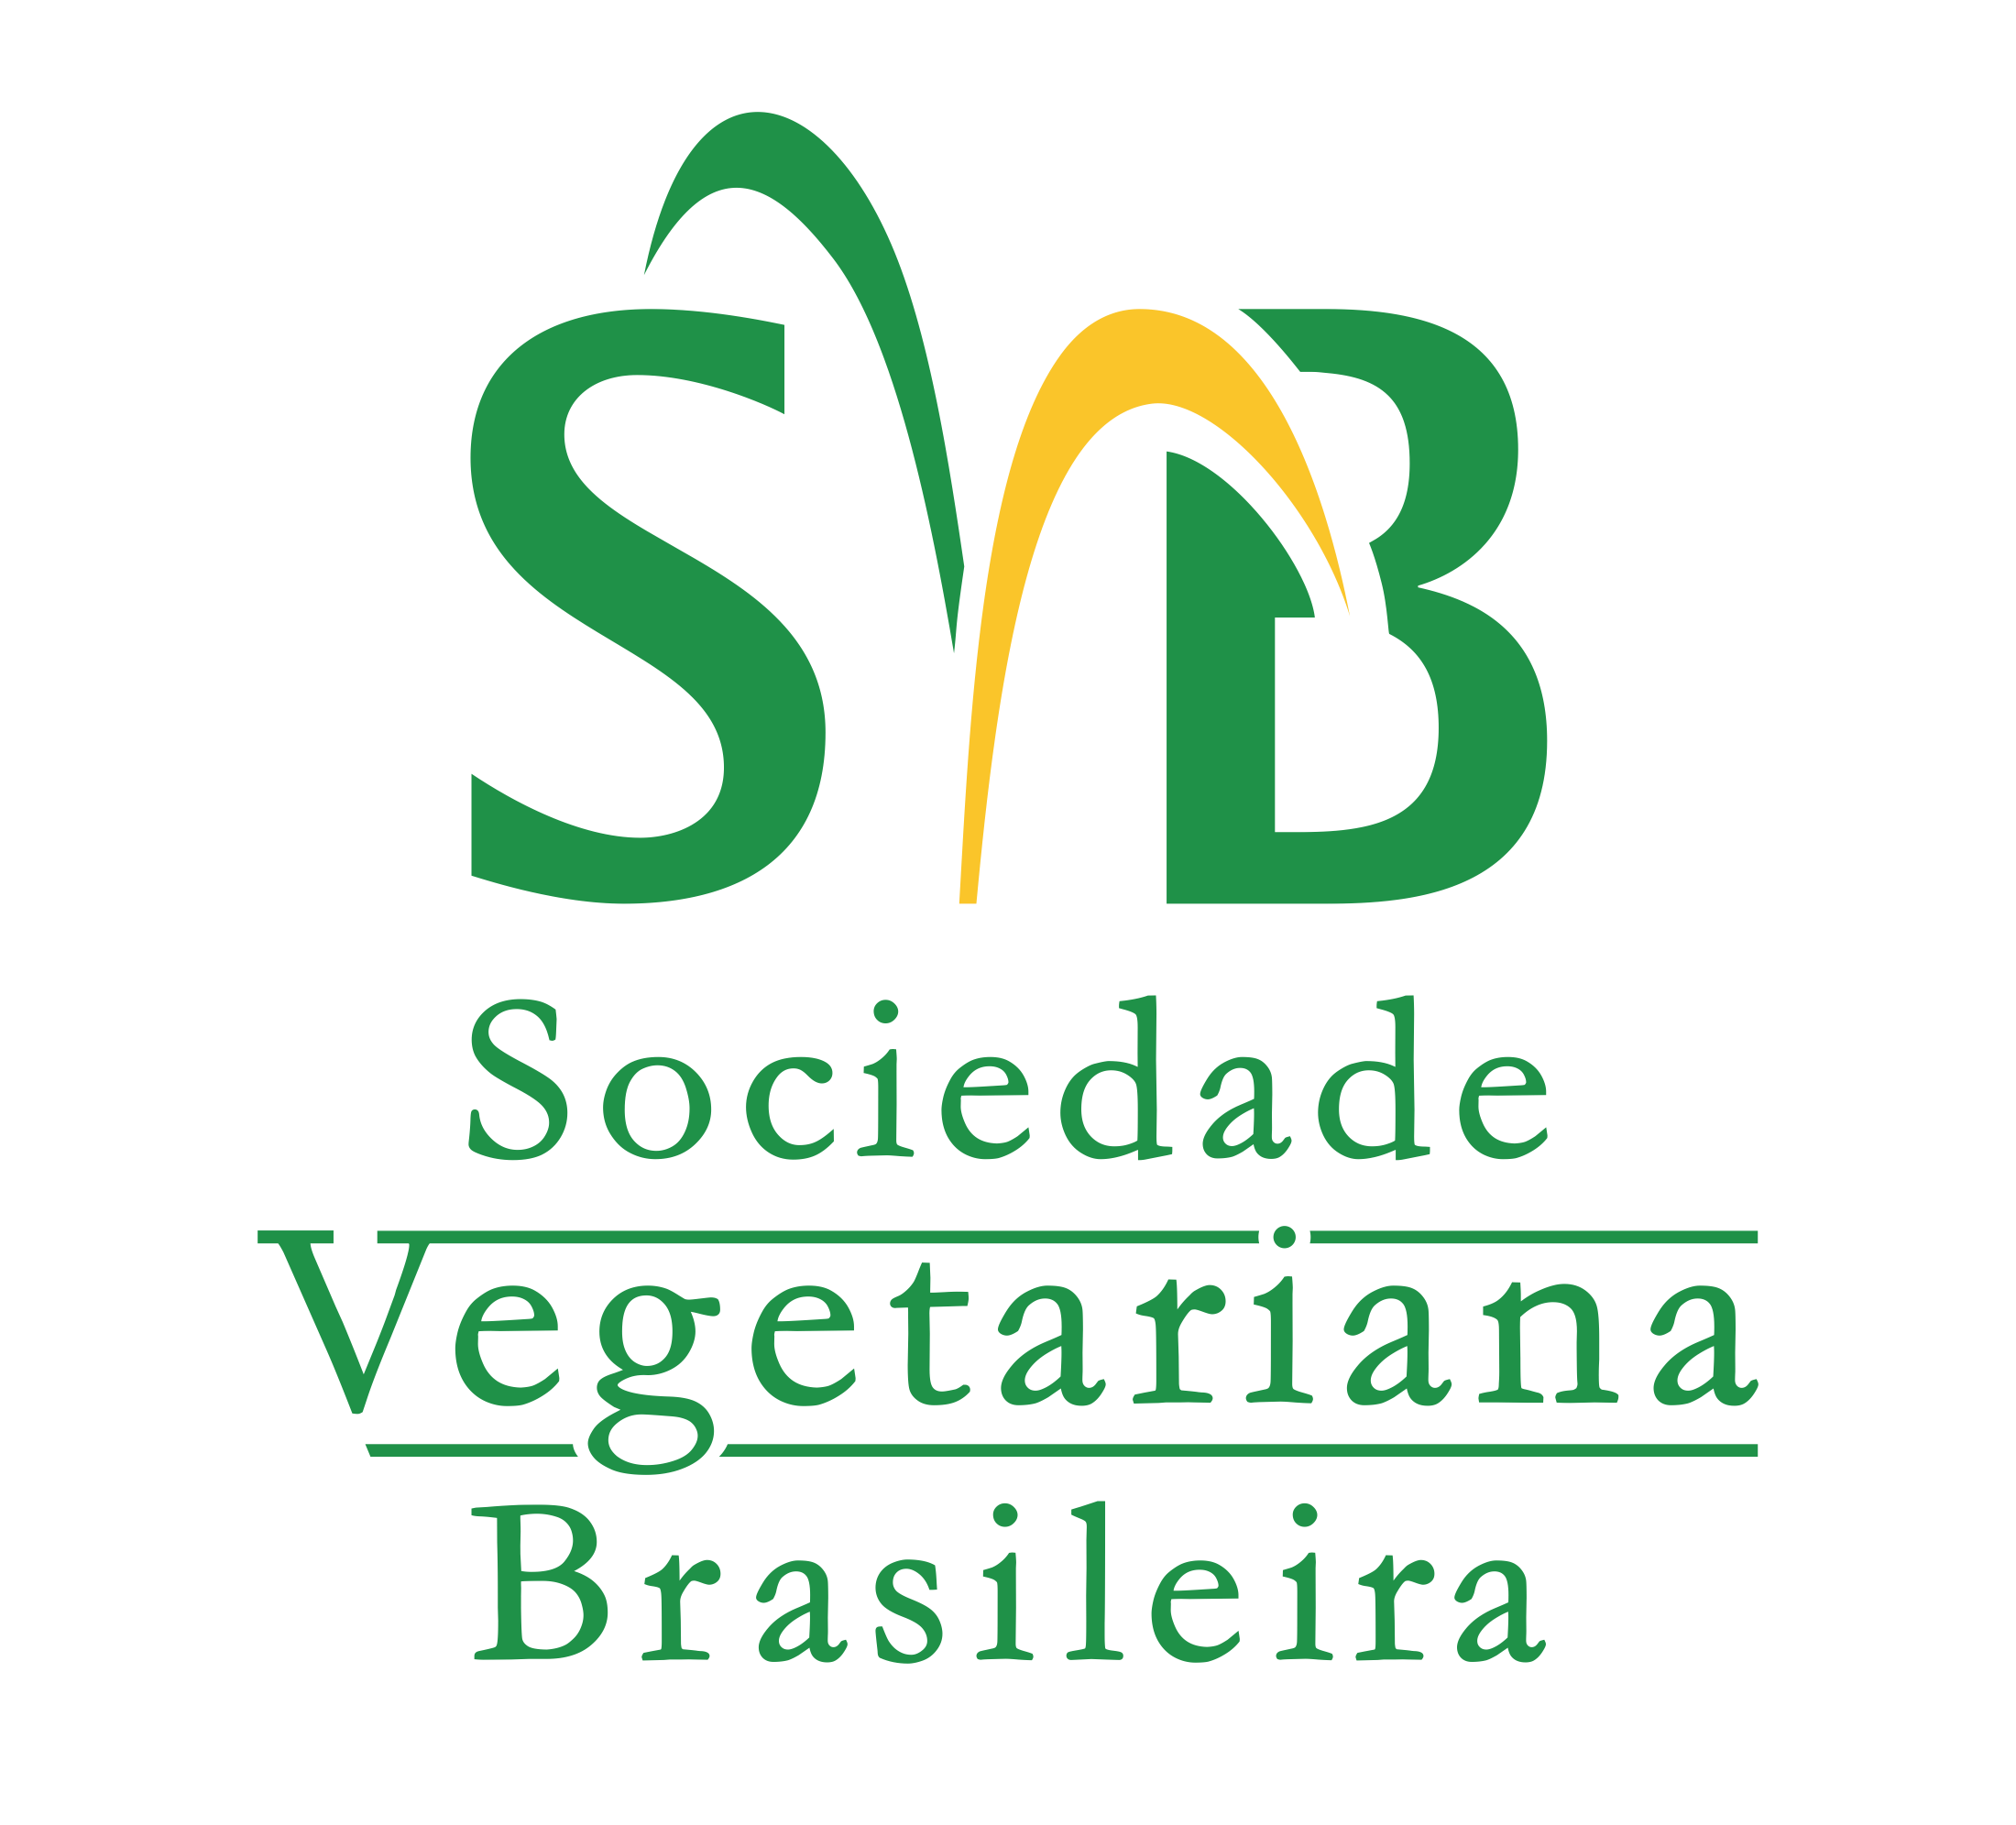 Sociedade Vegetariana Brasileira